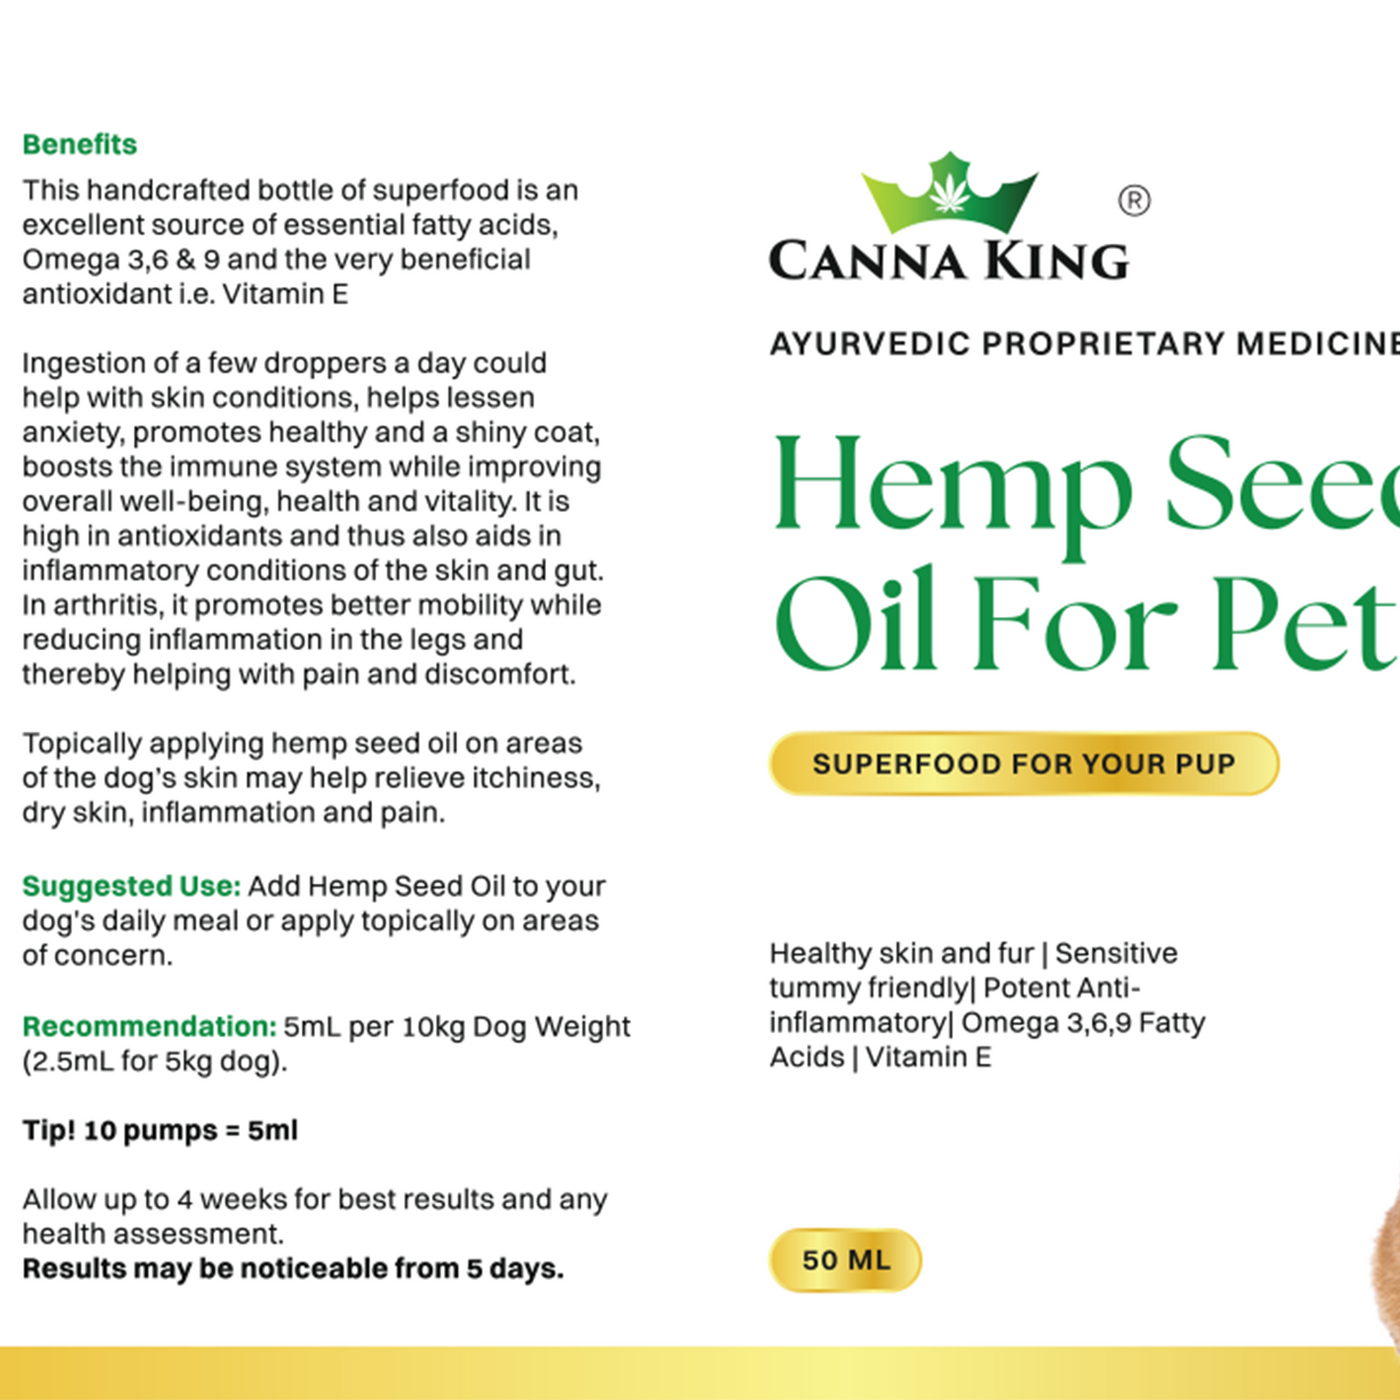 Cannaking Hemp Seed Oil for Pets - 50 ml